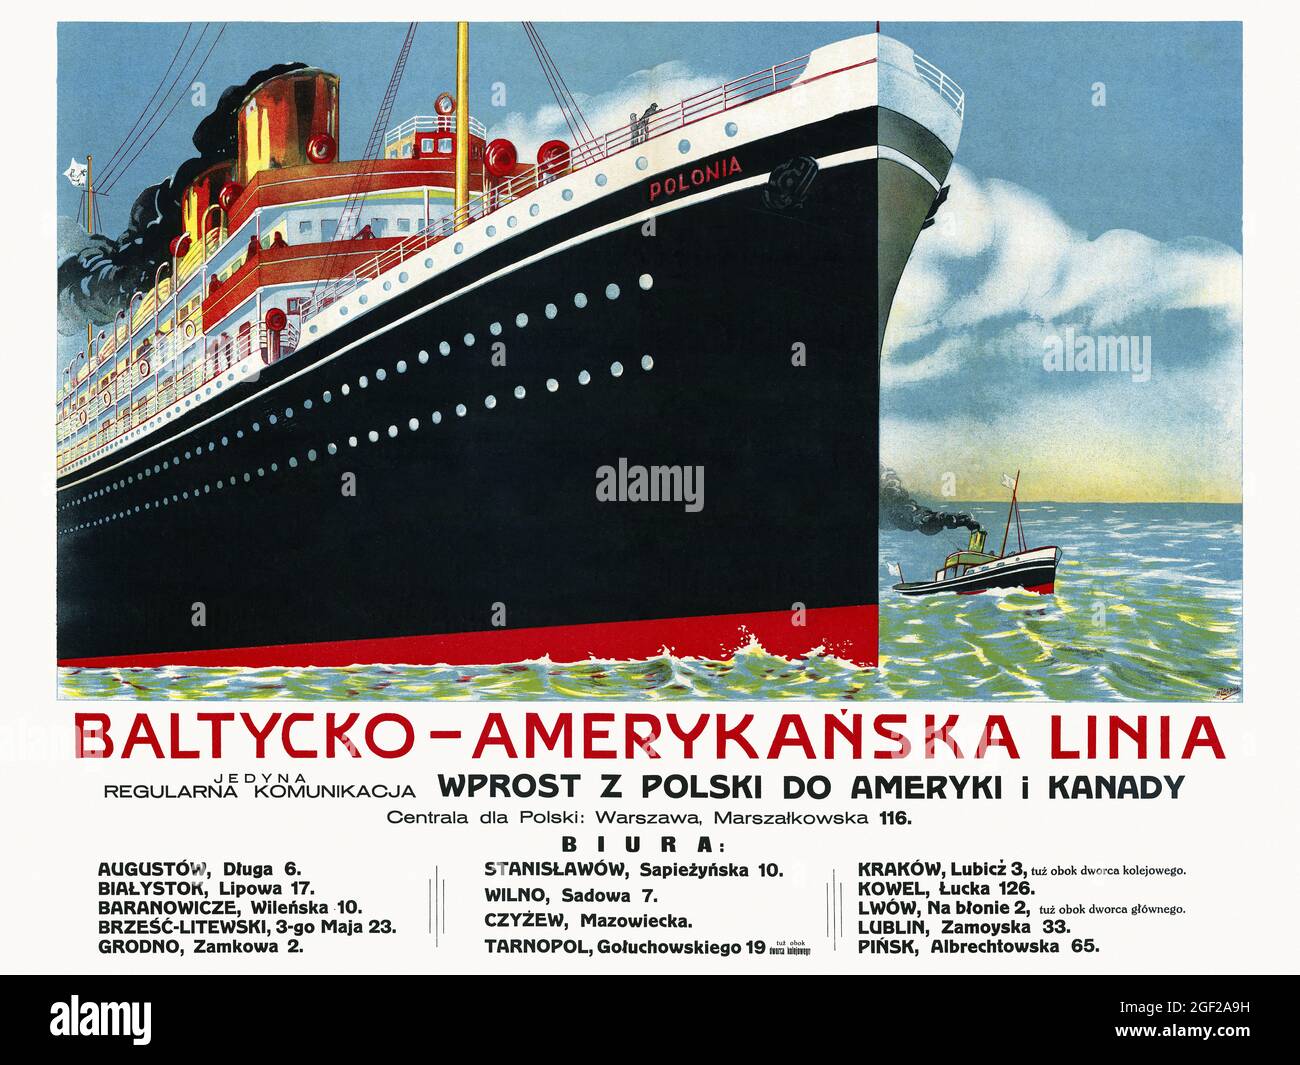 Bałtycko - Amerykańska Linia by M. Zaspicki (dates unknown). Restored vintage poster published in the 1930s in Poland. Stock Photo